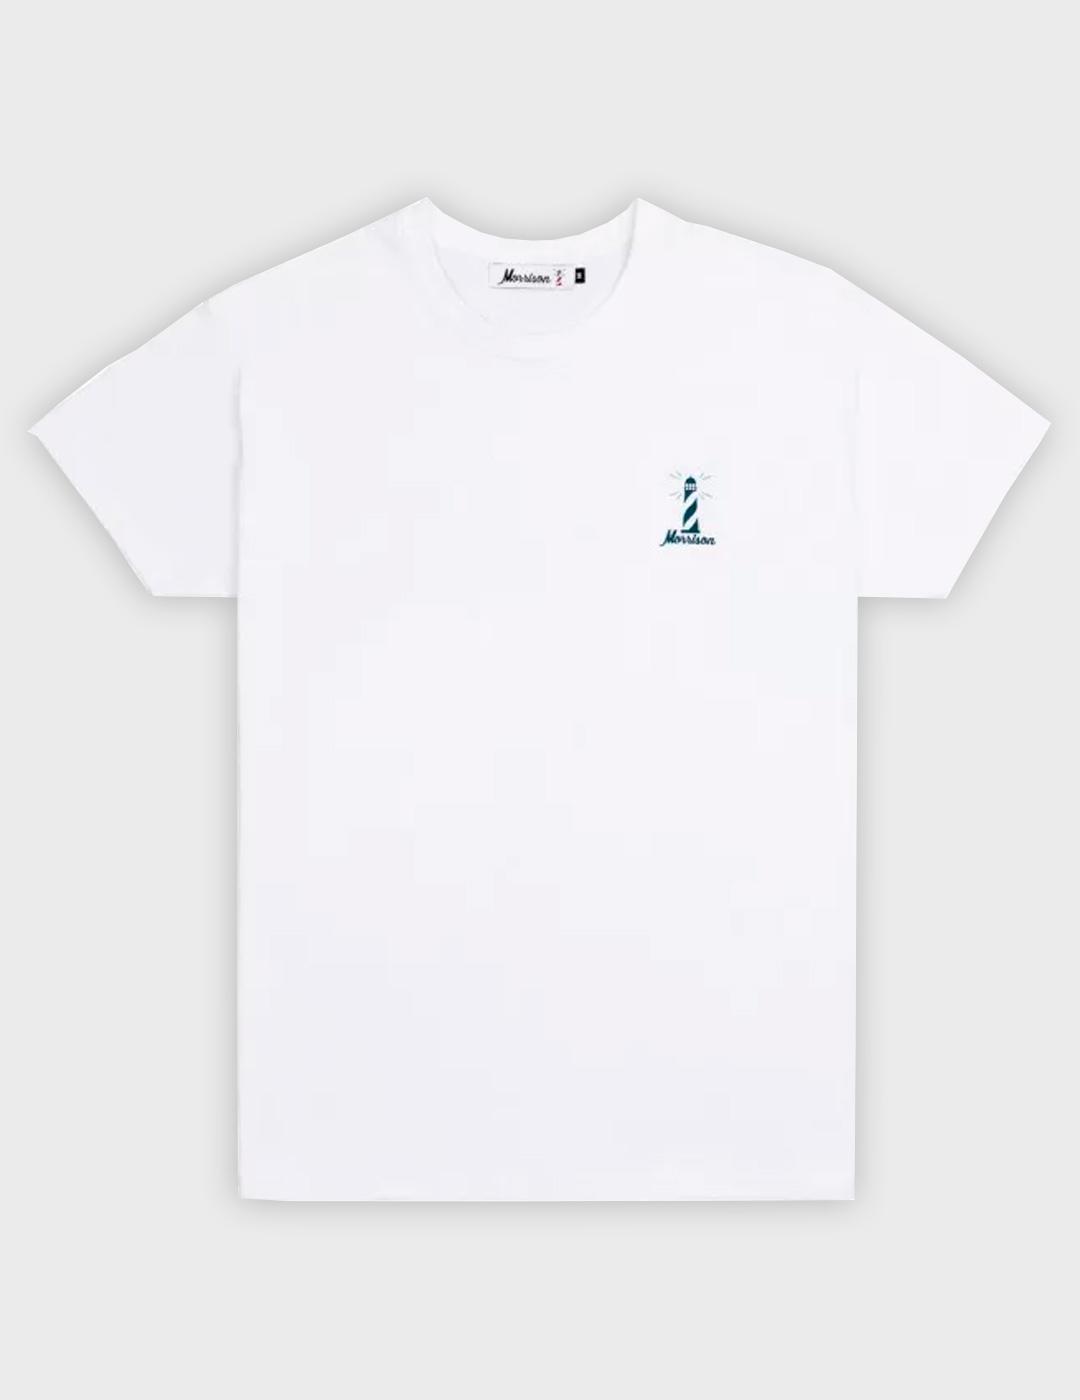 Camiseta Morrison Inka blanca unisex